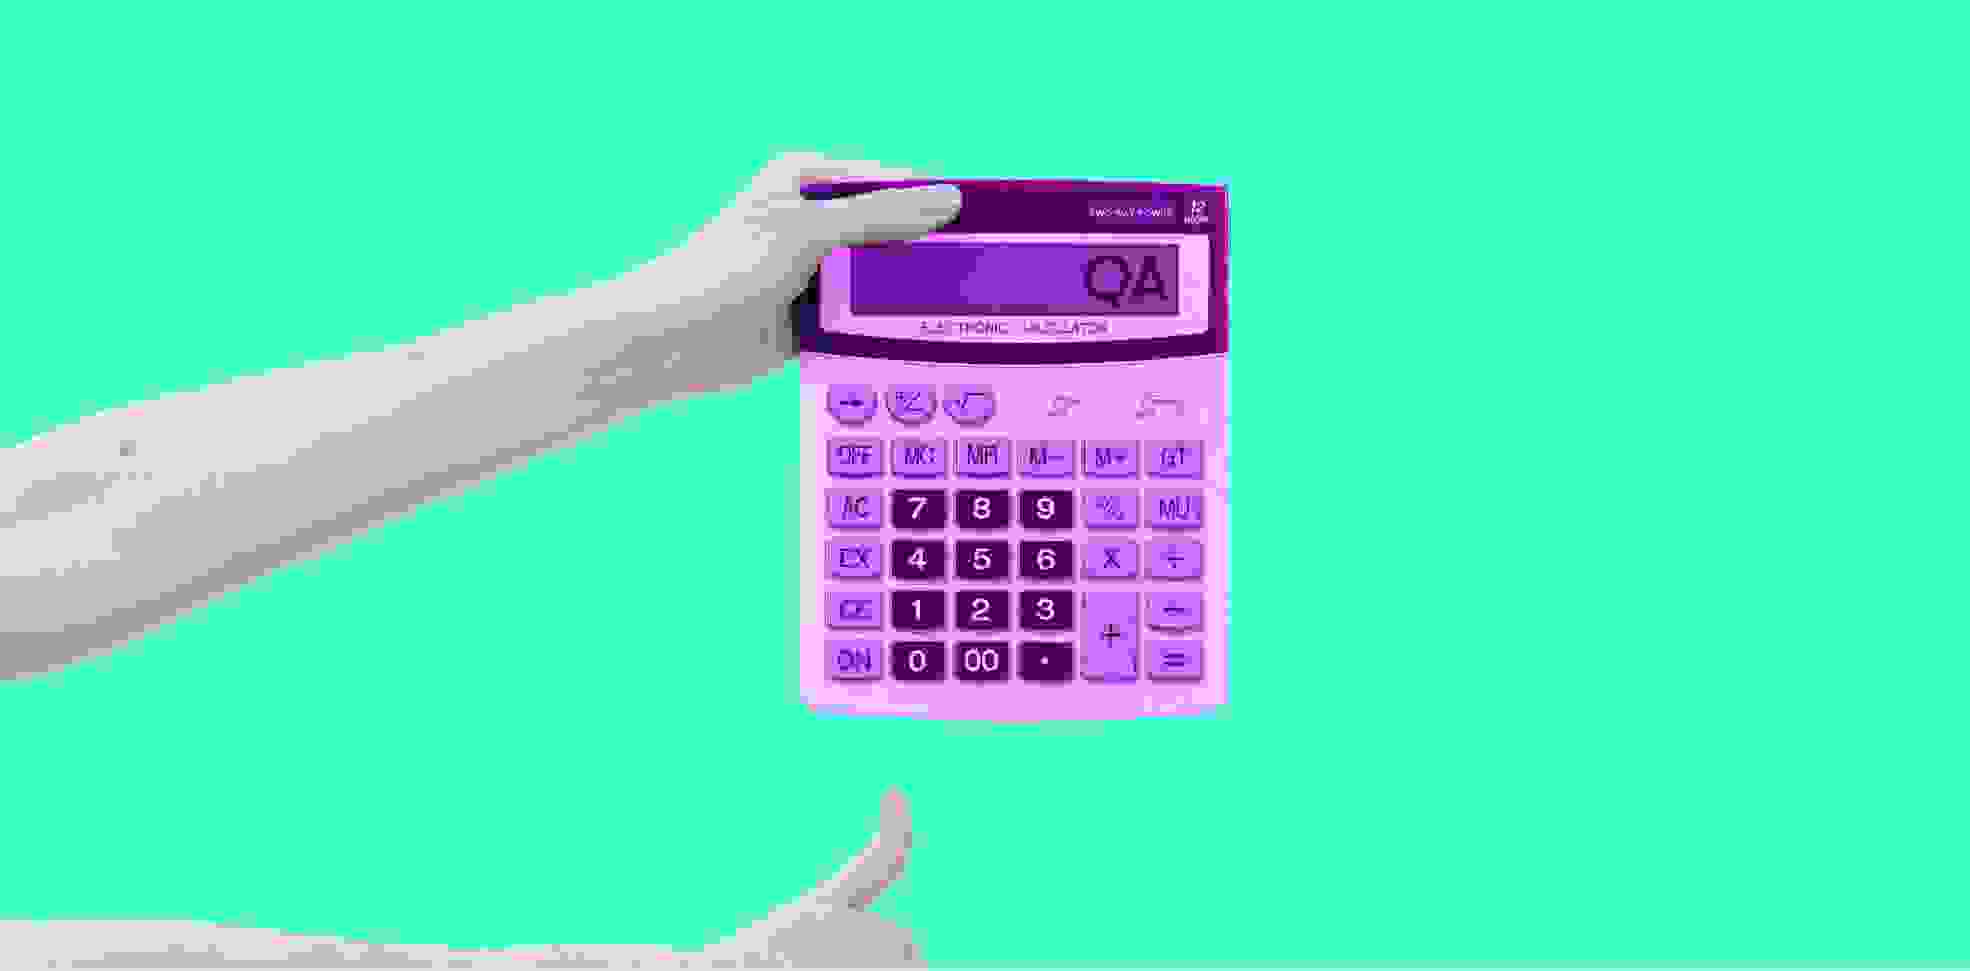 a hand holding a calculator